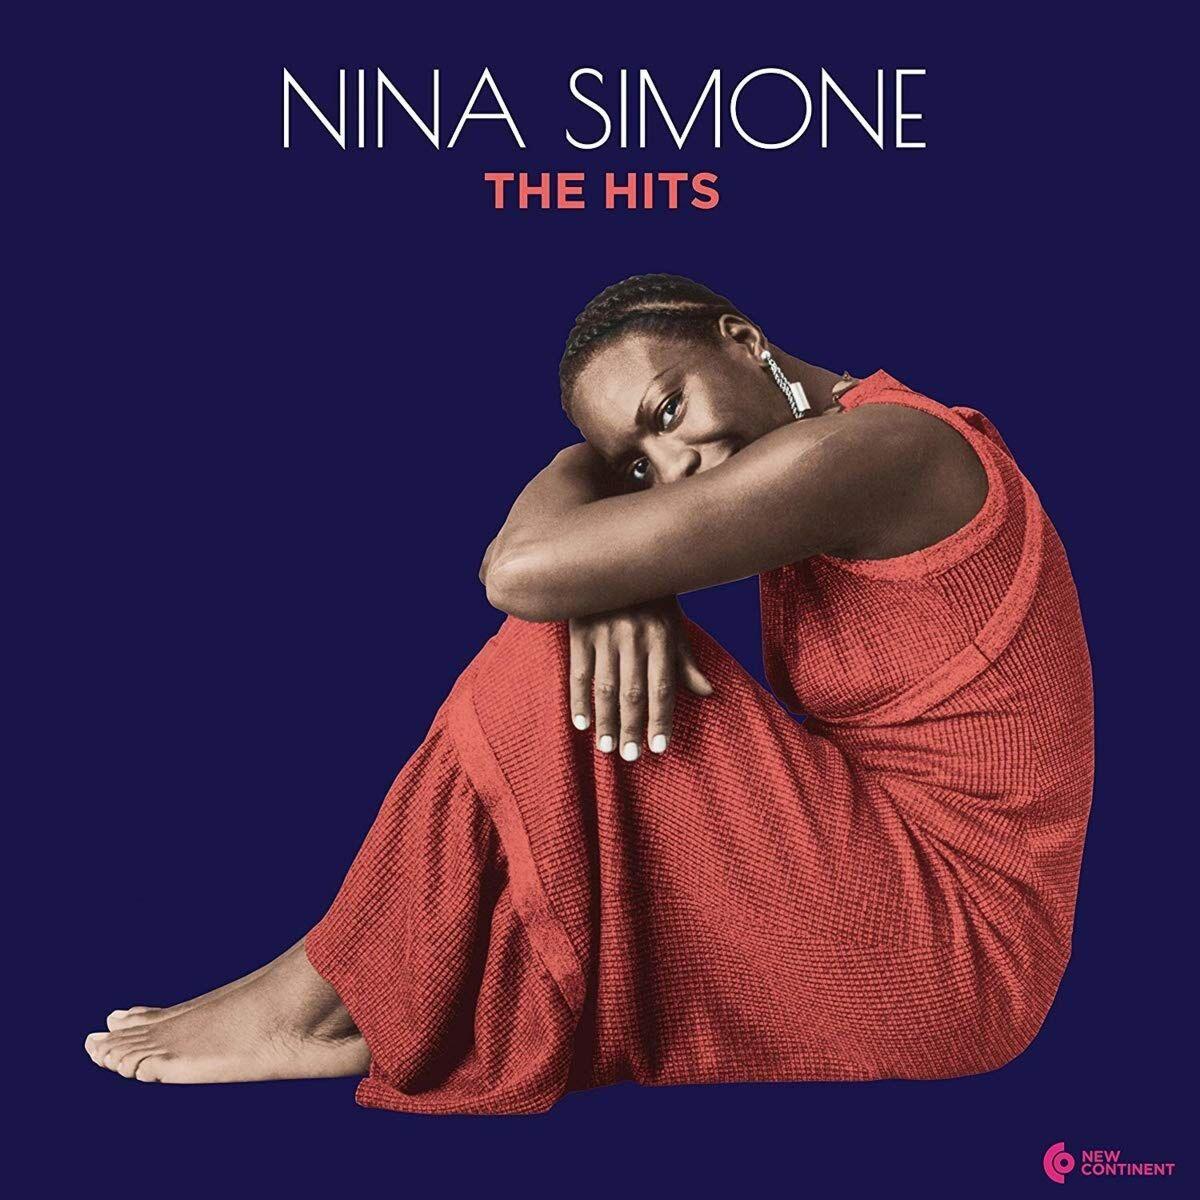 Simone Nina The Hits (Gatefold) LP